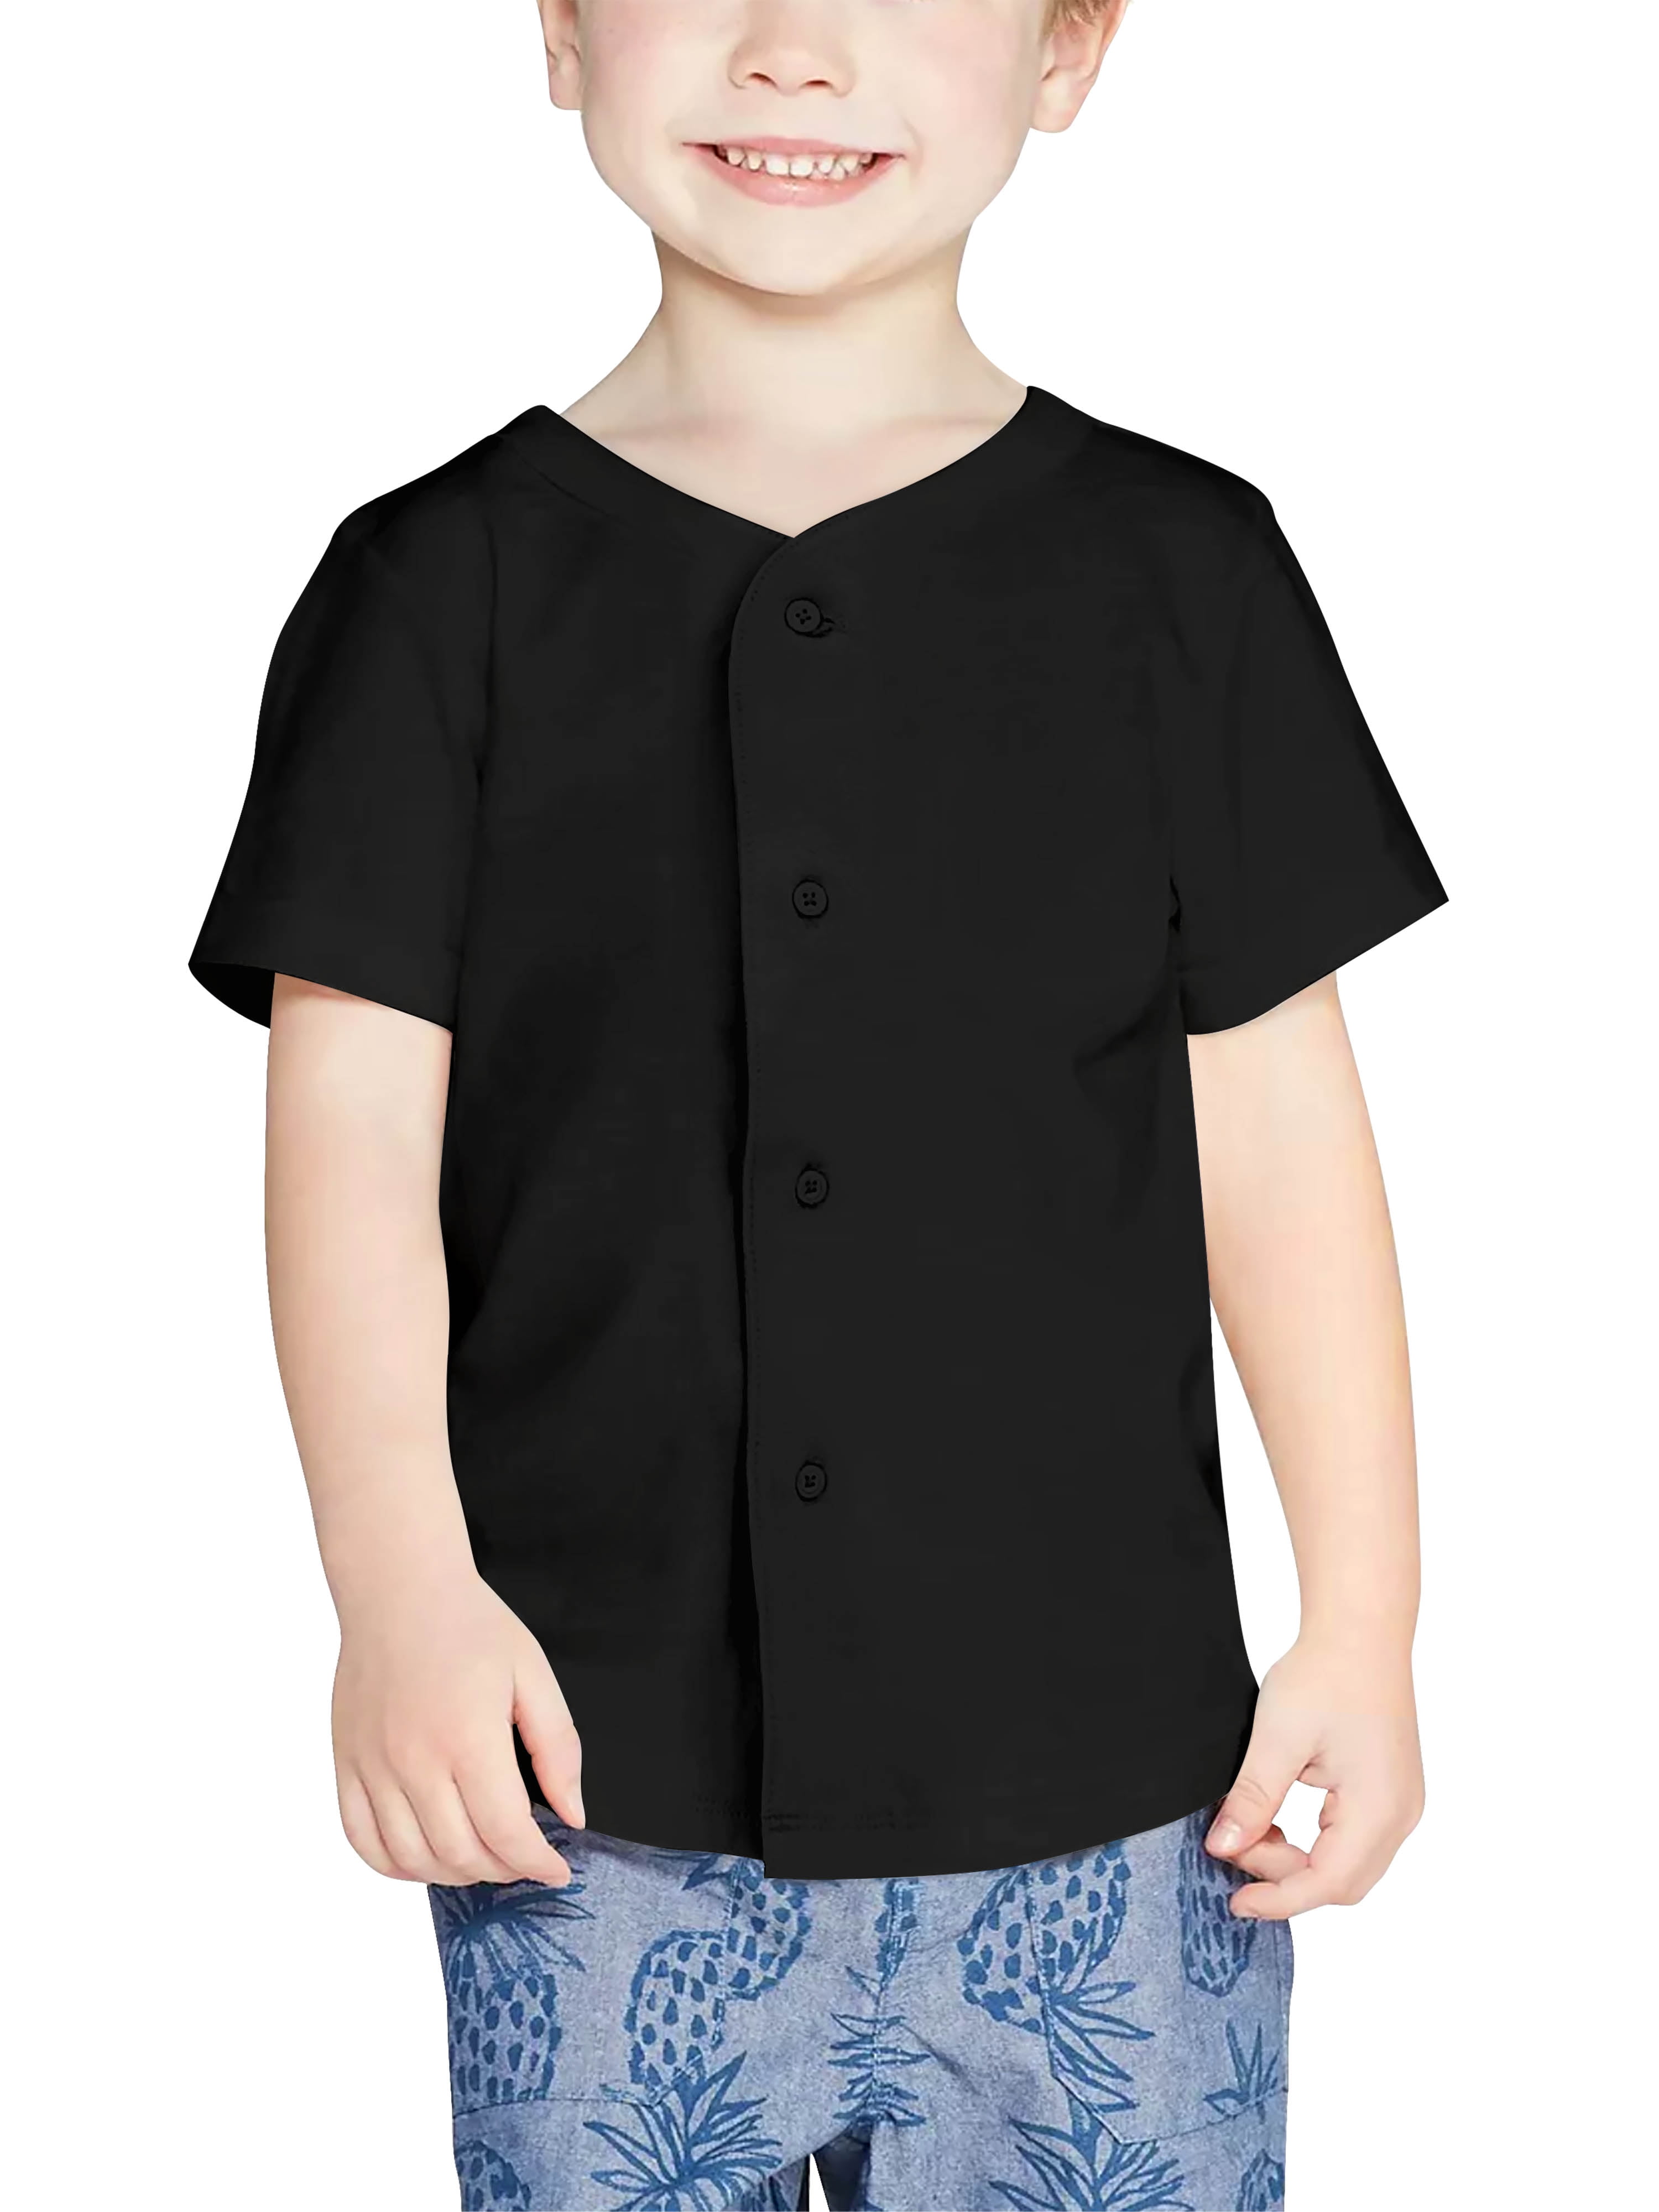 Celeb Kids Infant Toddler Boys Short Sleeve Baseball T-Shirt Tee Shirt Top